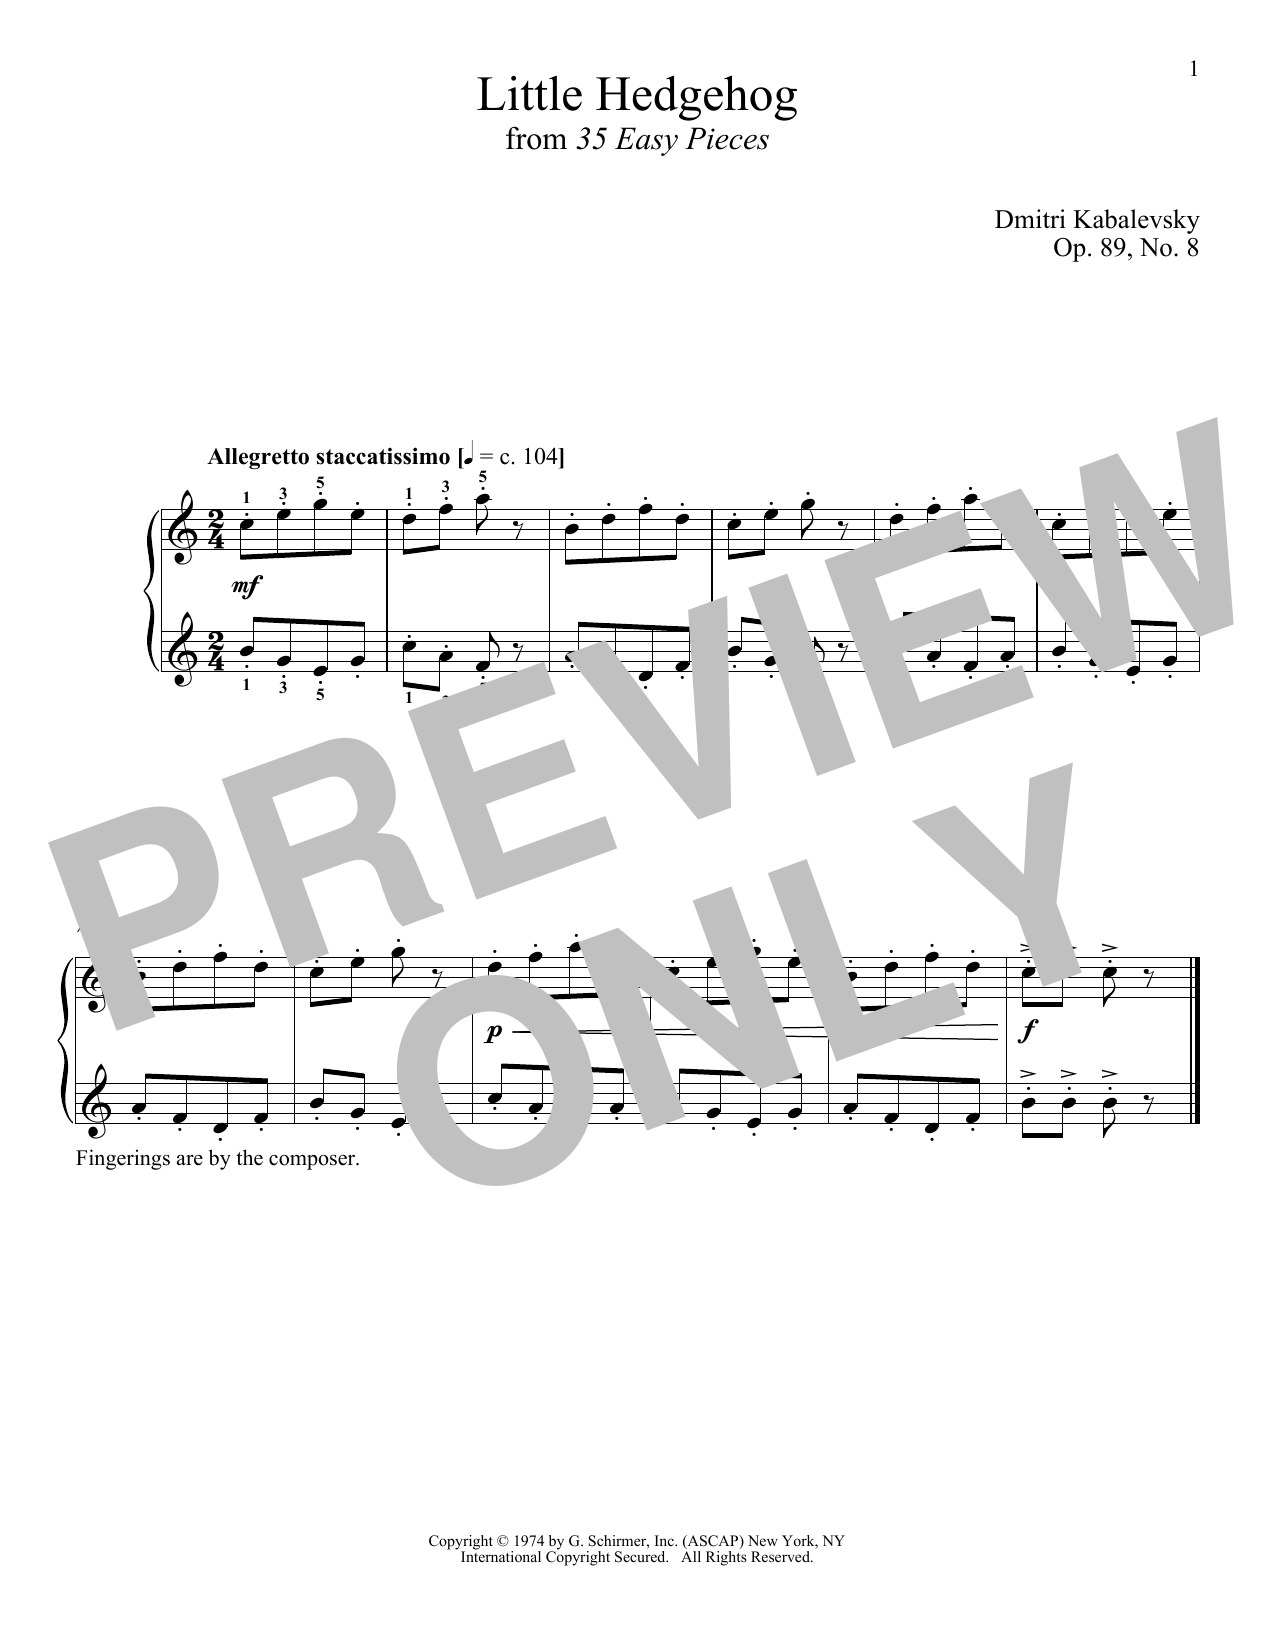 Dmitri Kabalevsky Little Hedgehog, Op. 89, No. 8 Sheet Music Notes & Chords for Piano - Download or Print PDF